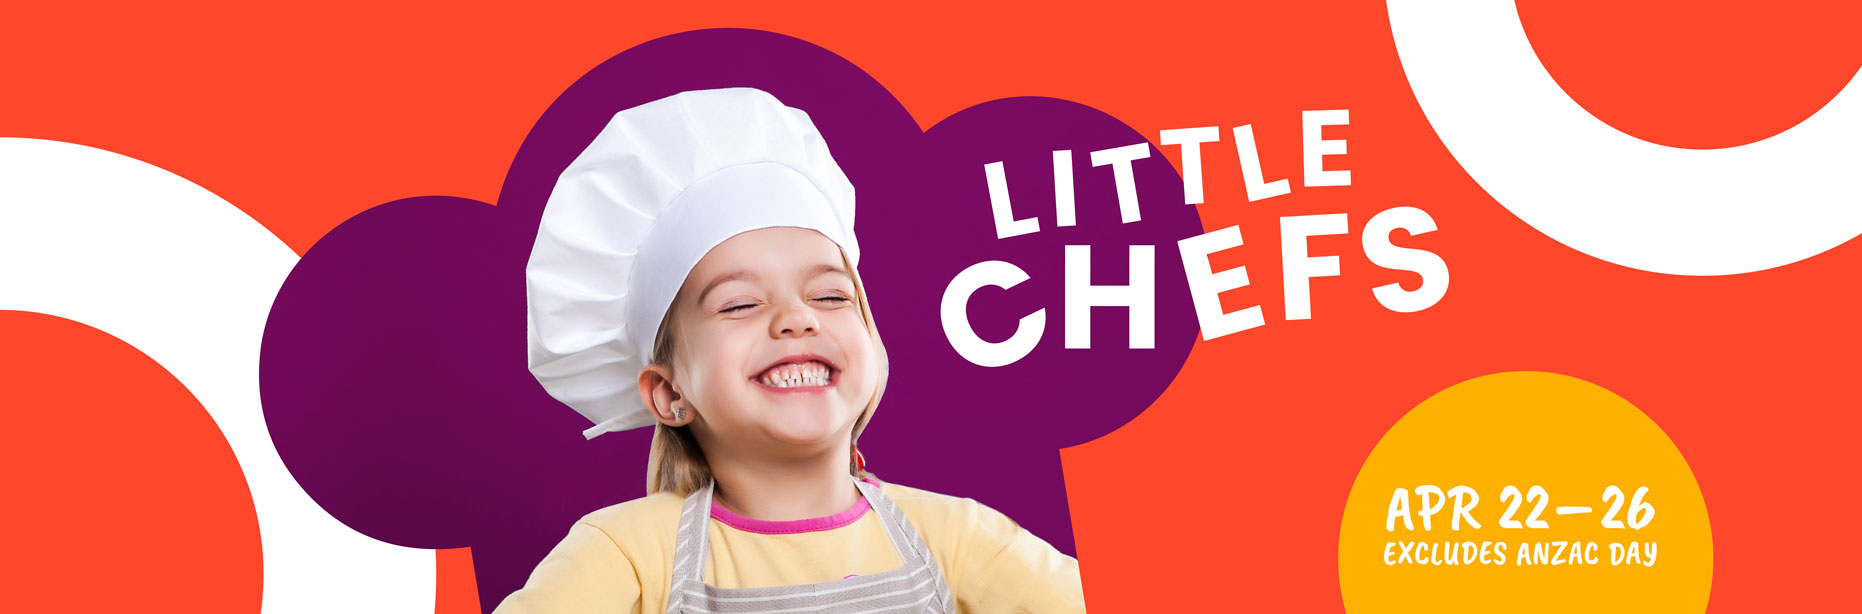 Little Chefs: April School Holiday Program